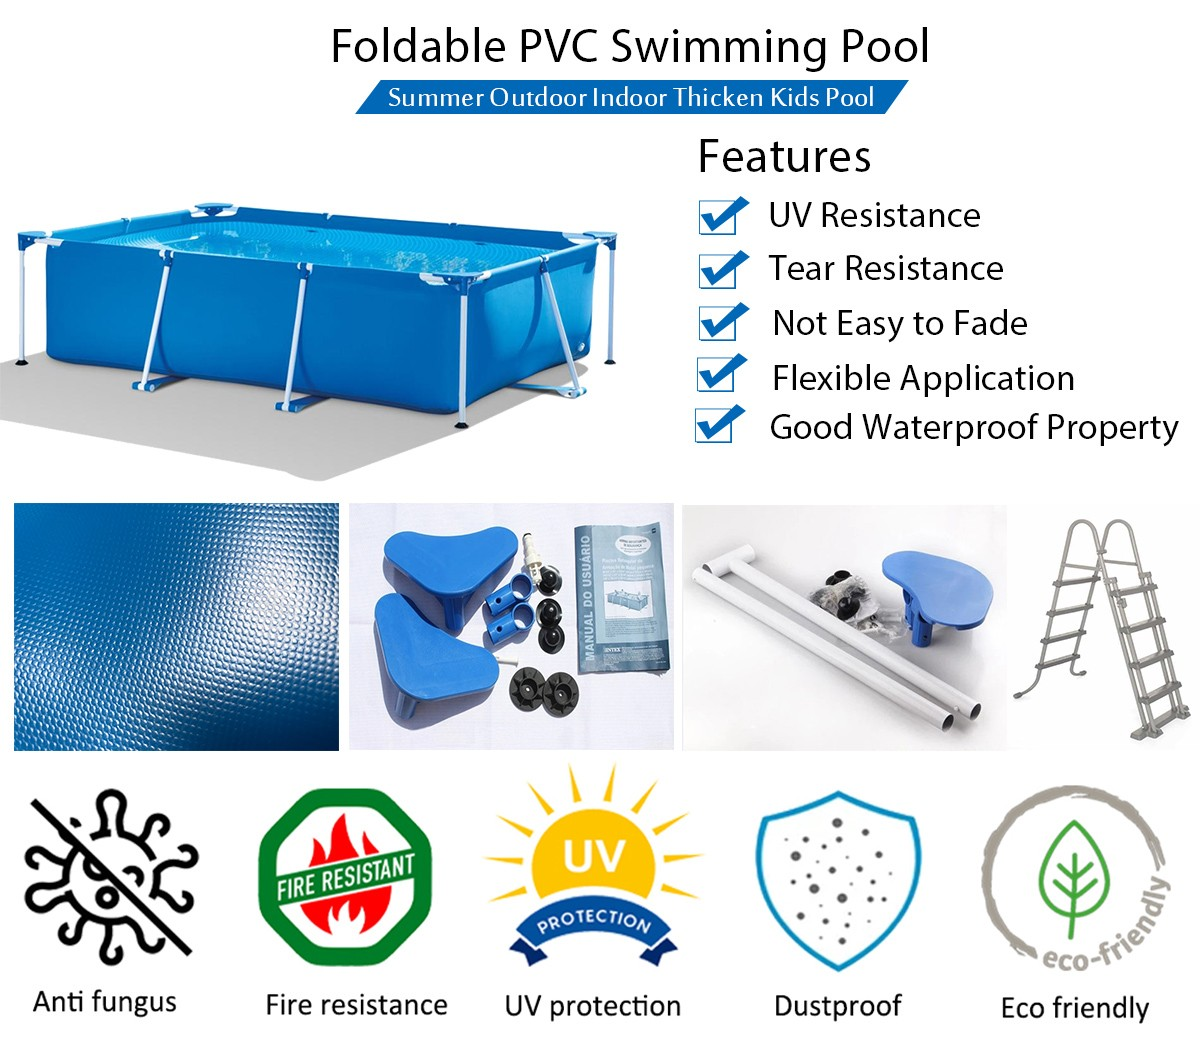 Foldable PVC swimming pool